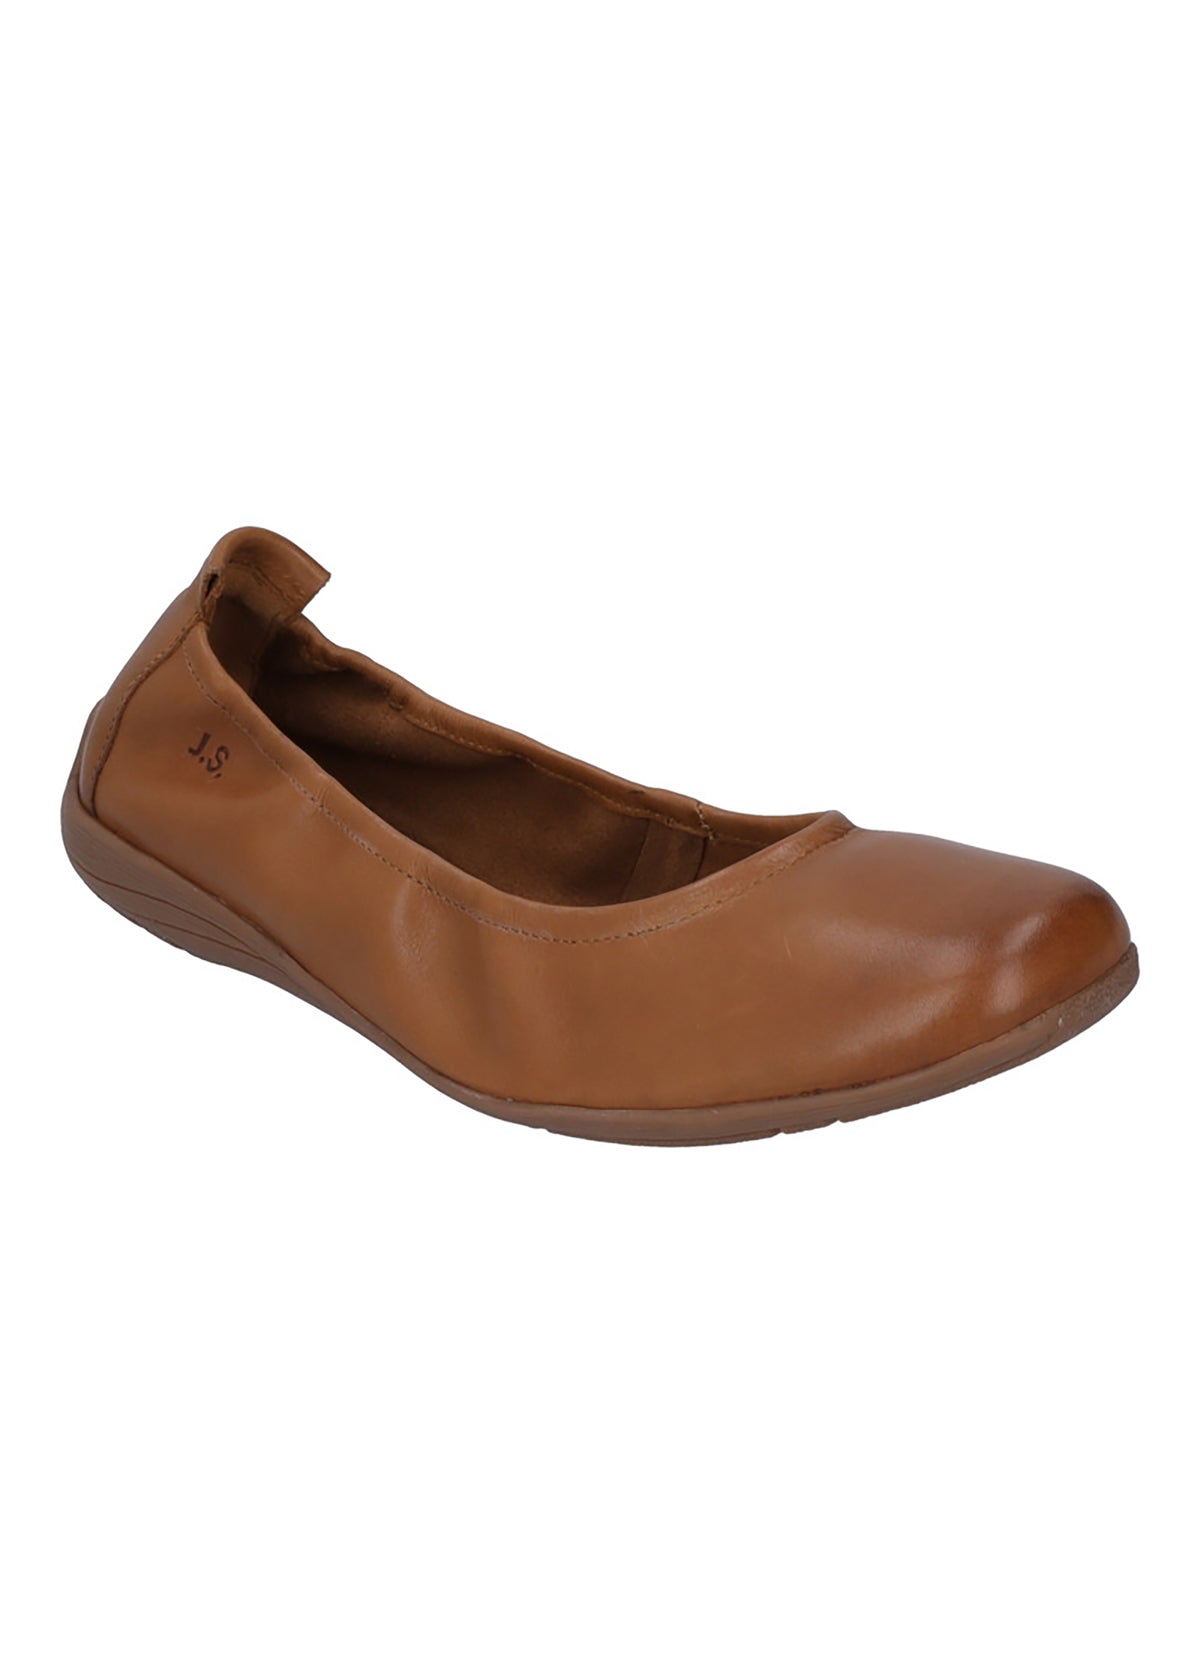 Ballerina shoes - cognac brown leather, Fenja 01